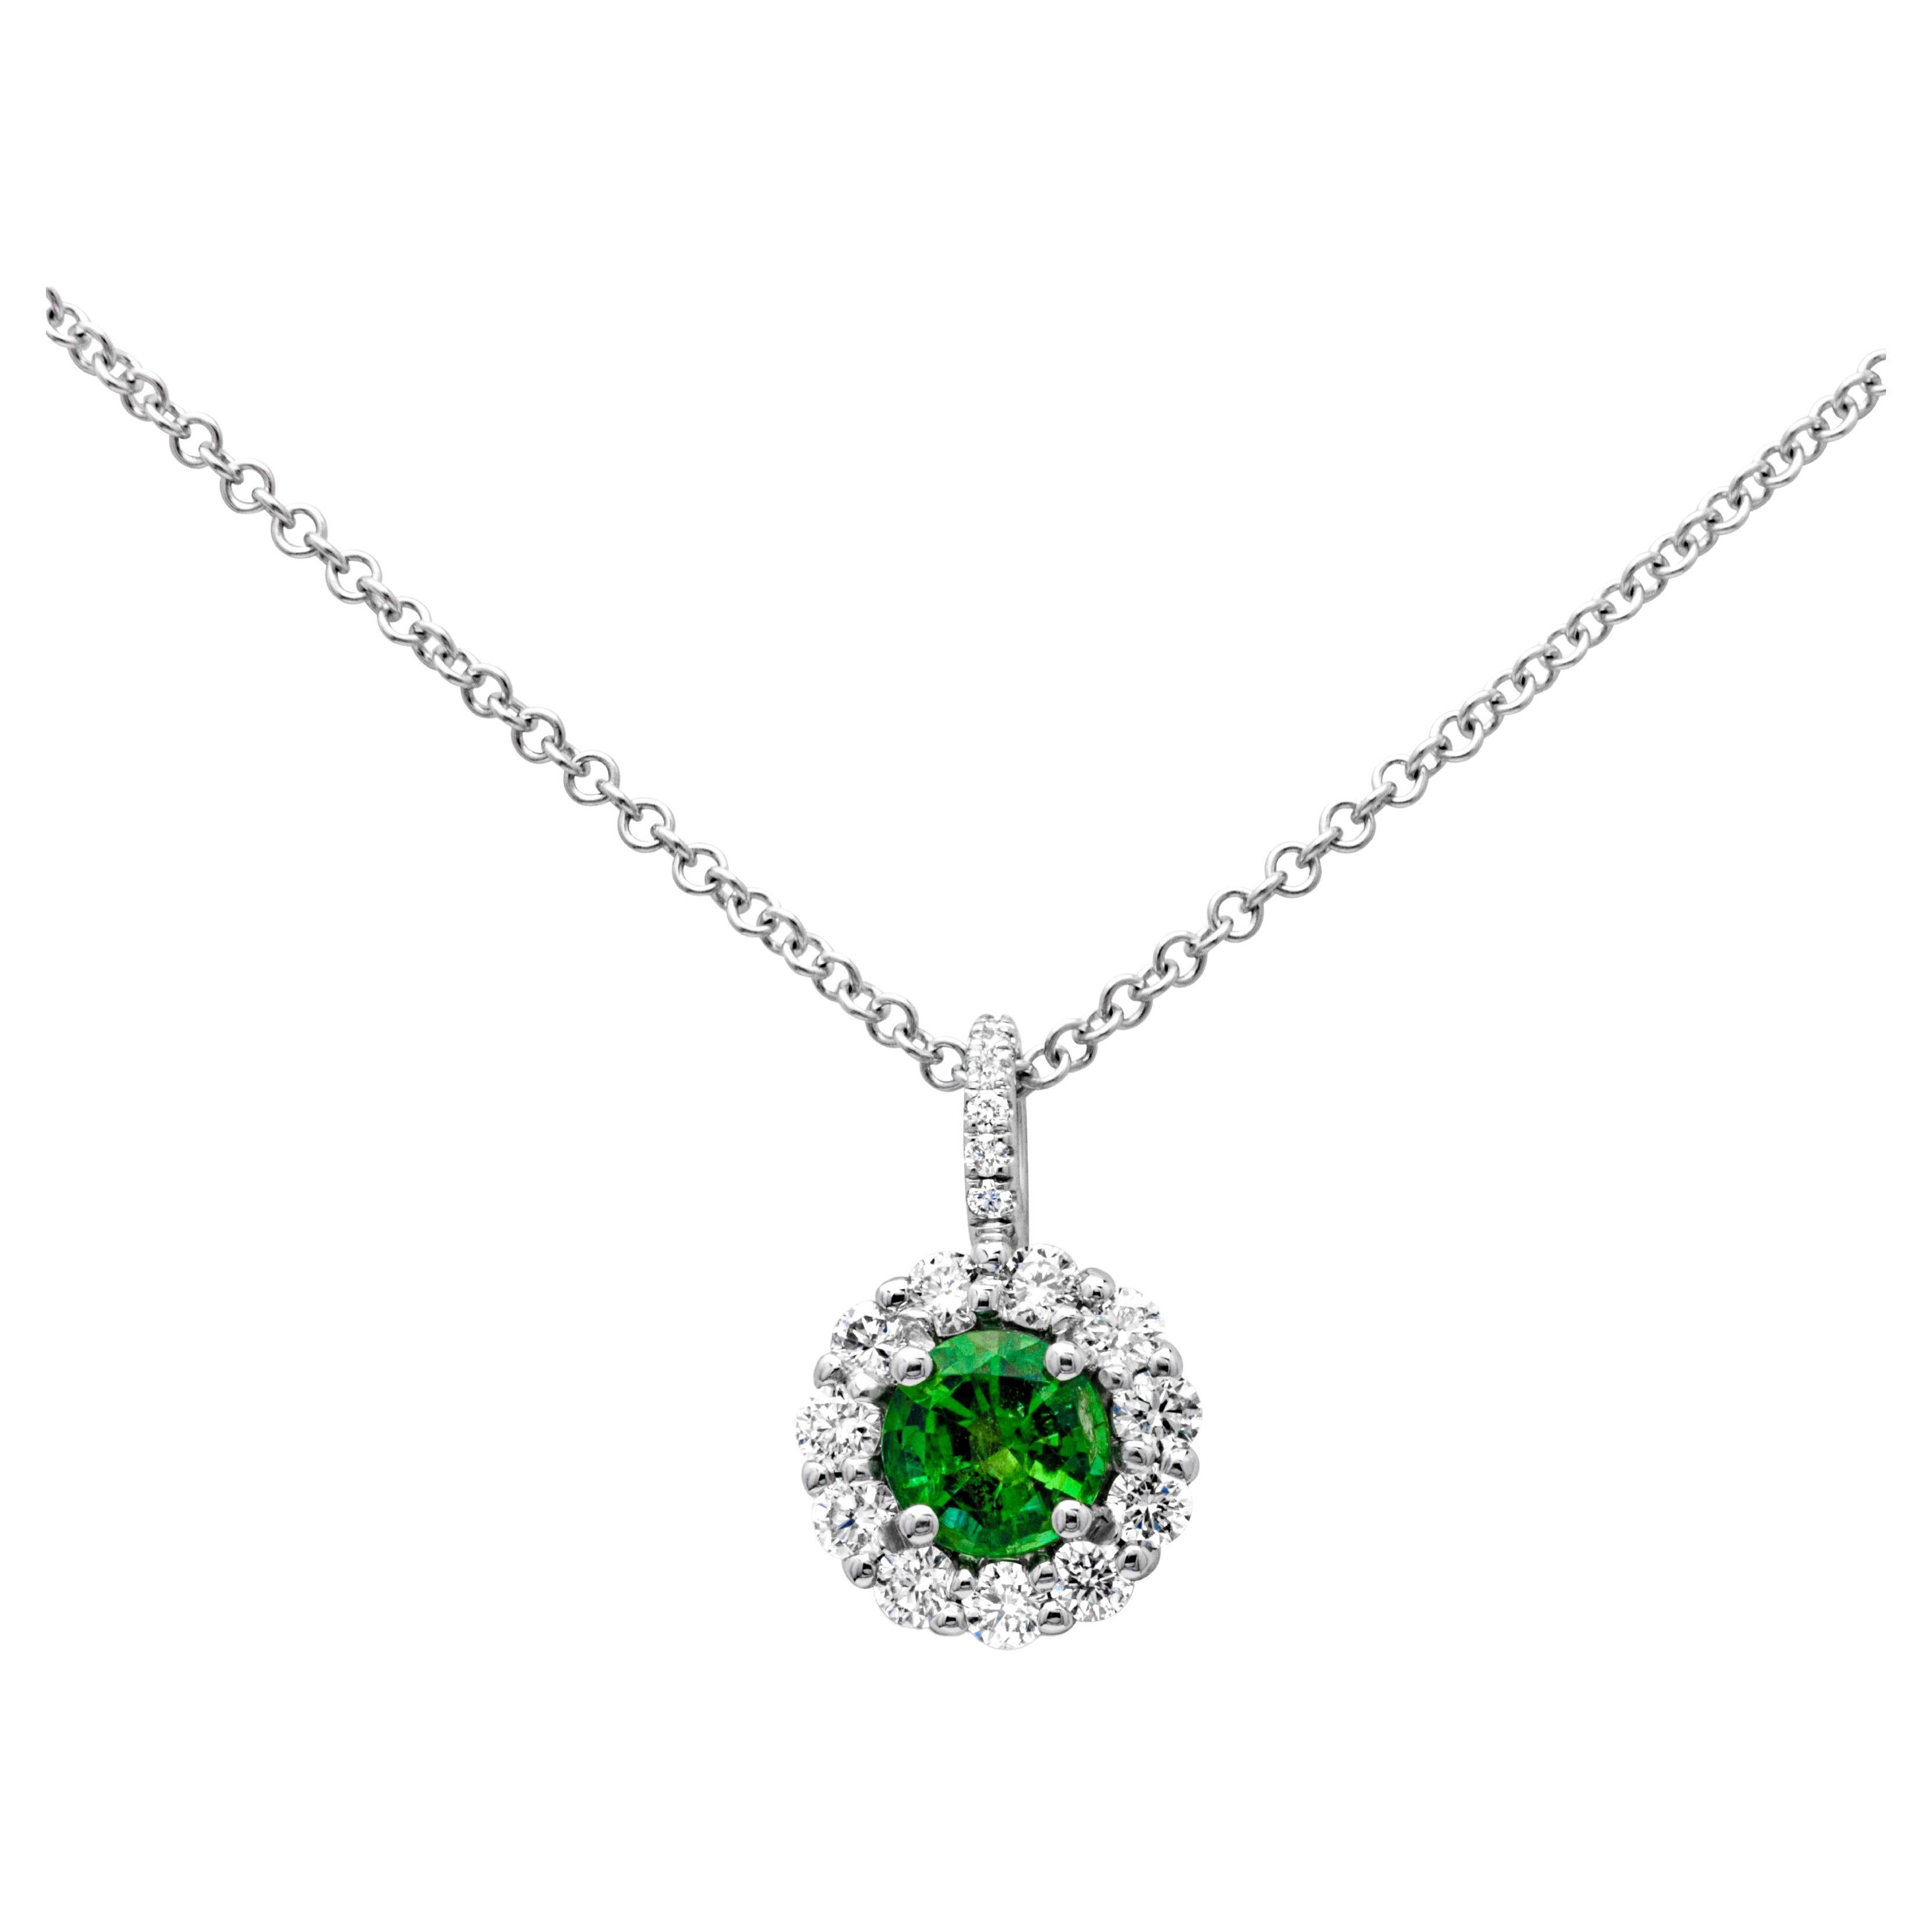 Roman Malakov 0.33 Carats Round Green Emerald with Diamond Halo Pendant Necklace